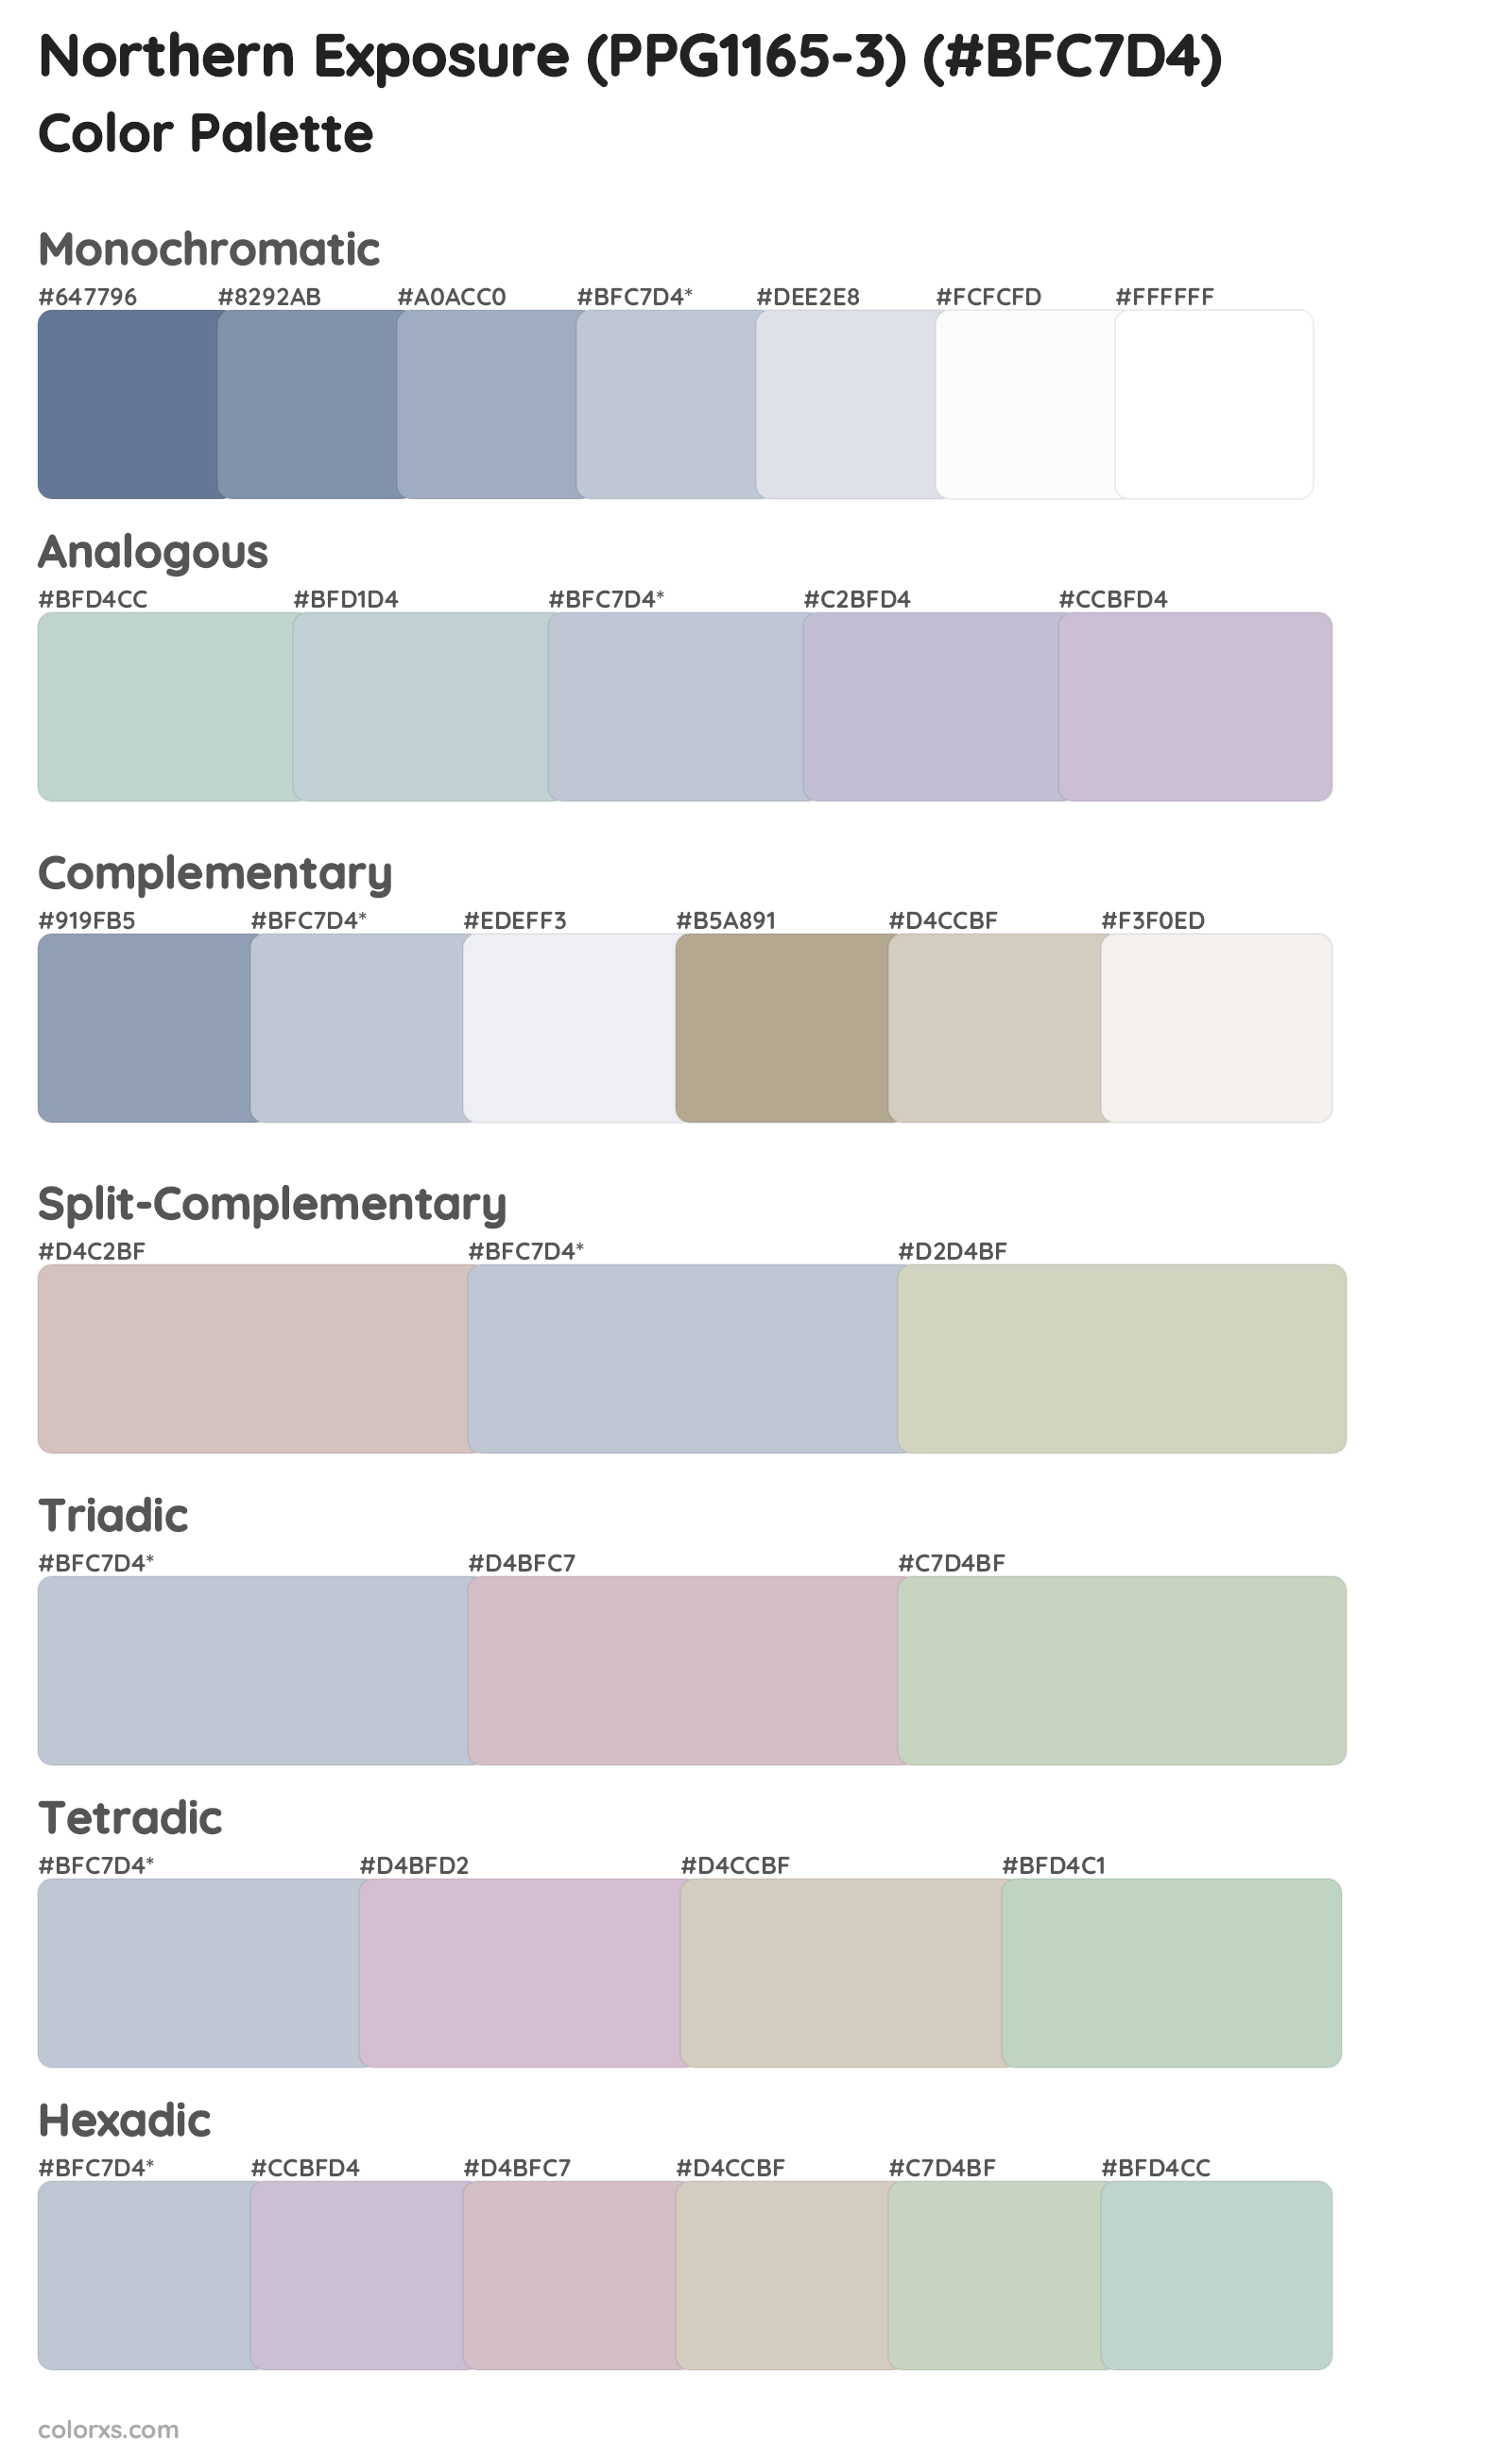 Northern Exposure (PPG1165-3) Color Scheme Palettes